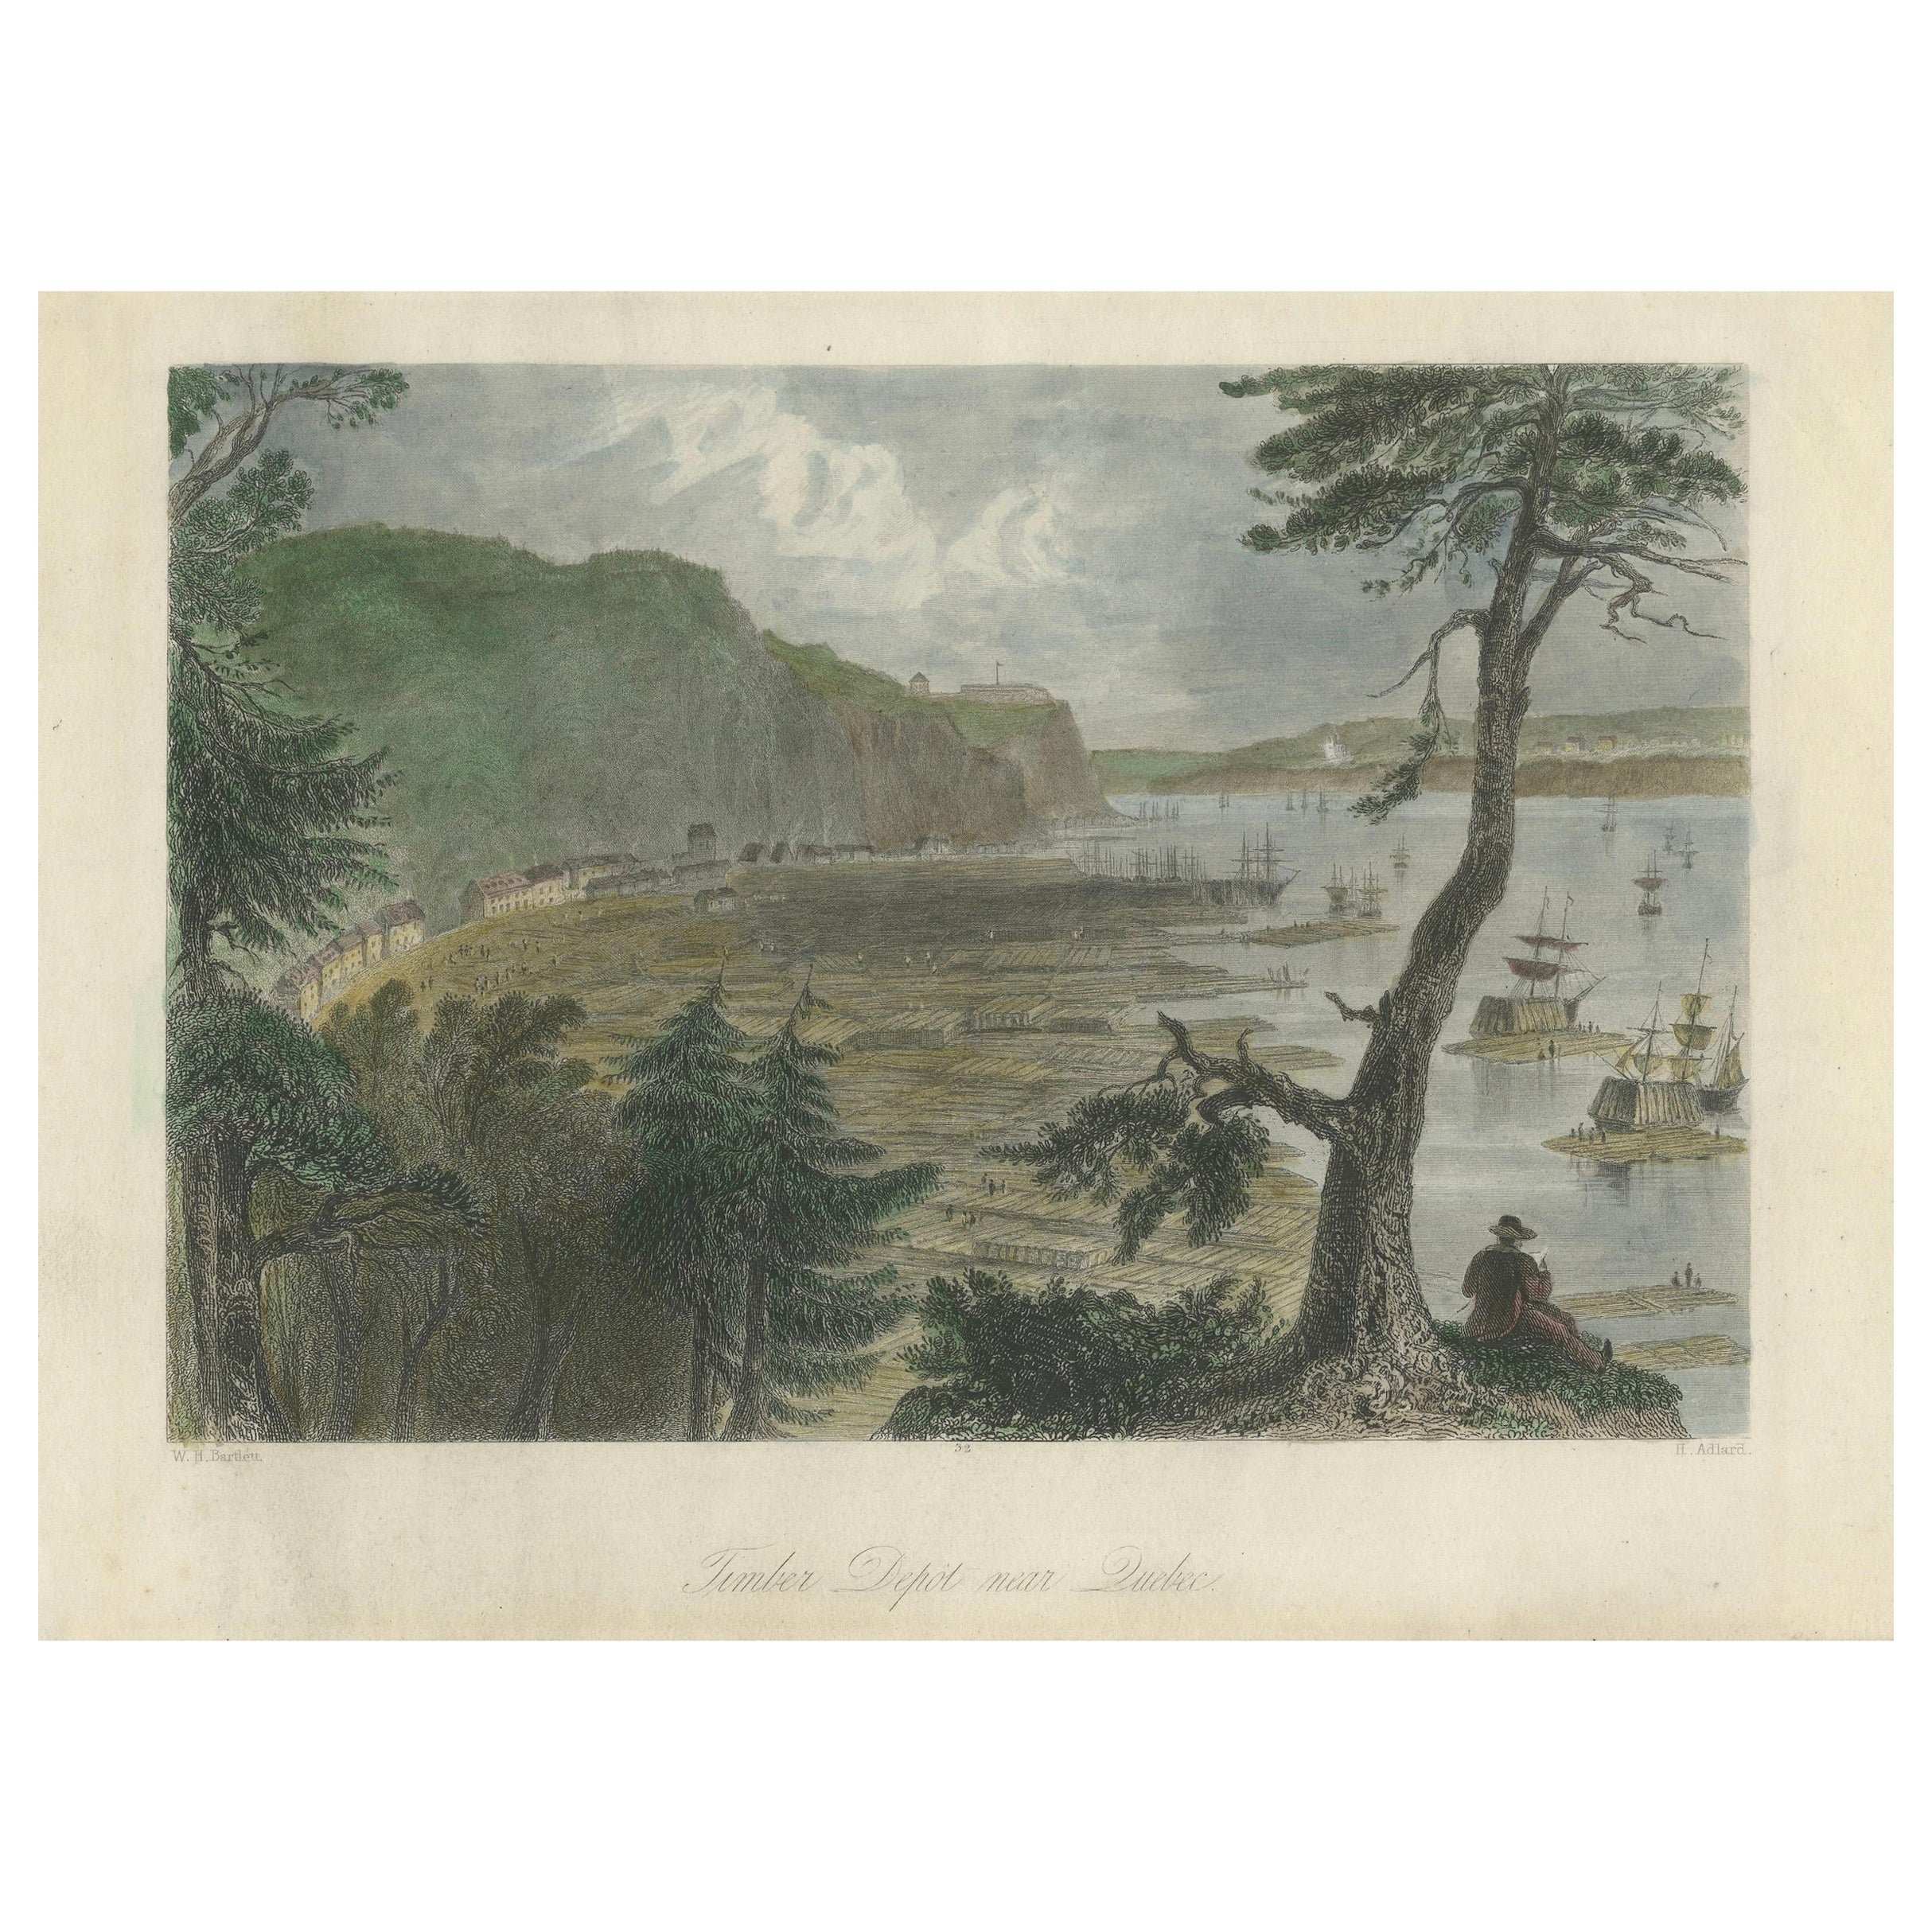 Gravur eines Holztopfes am St Lawrence River in der Nähe der Stadt Quebec, 1850 im Angebot